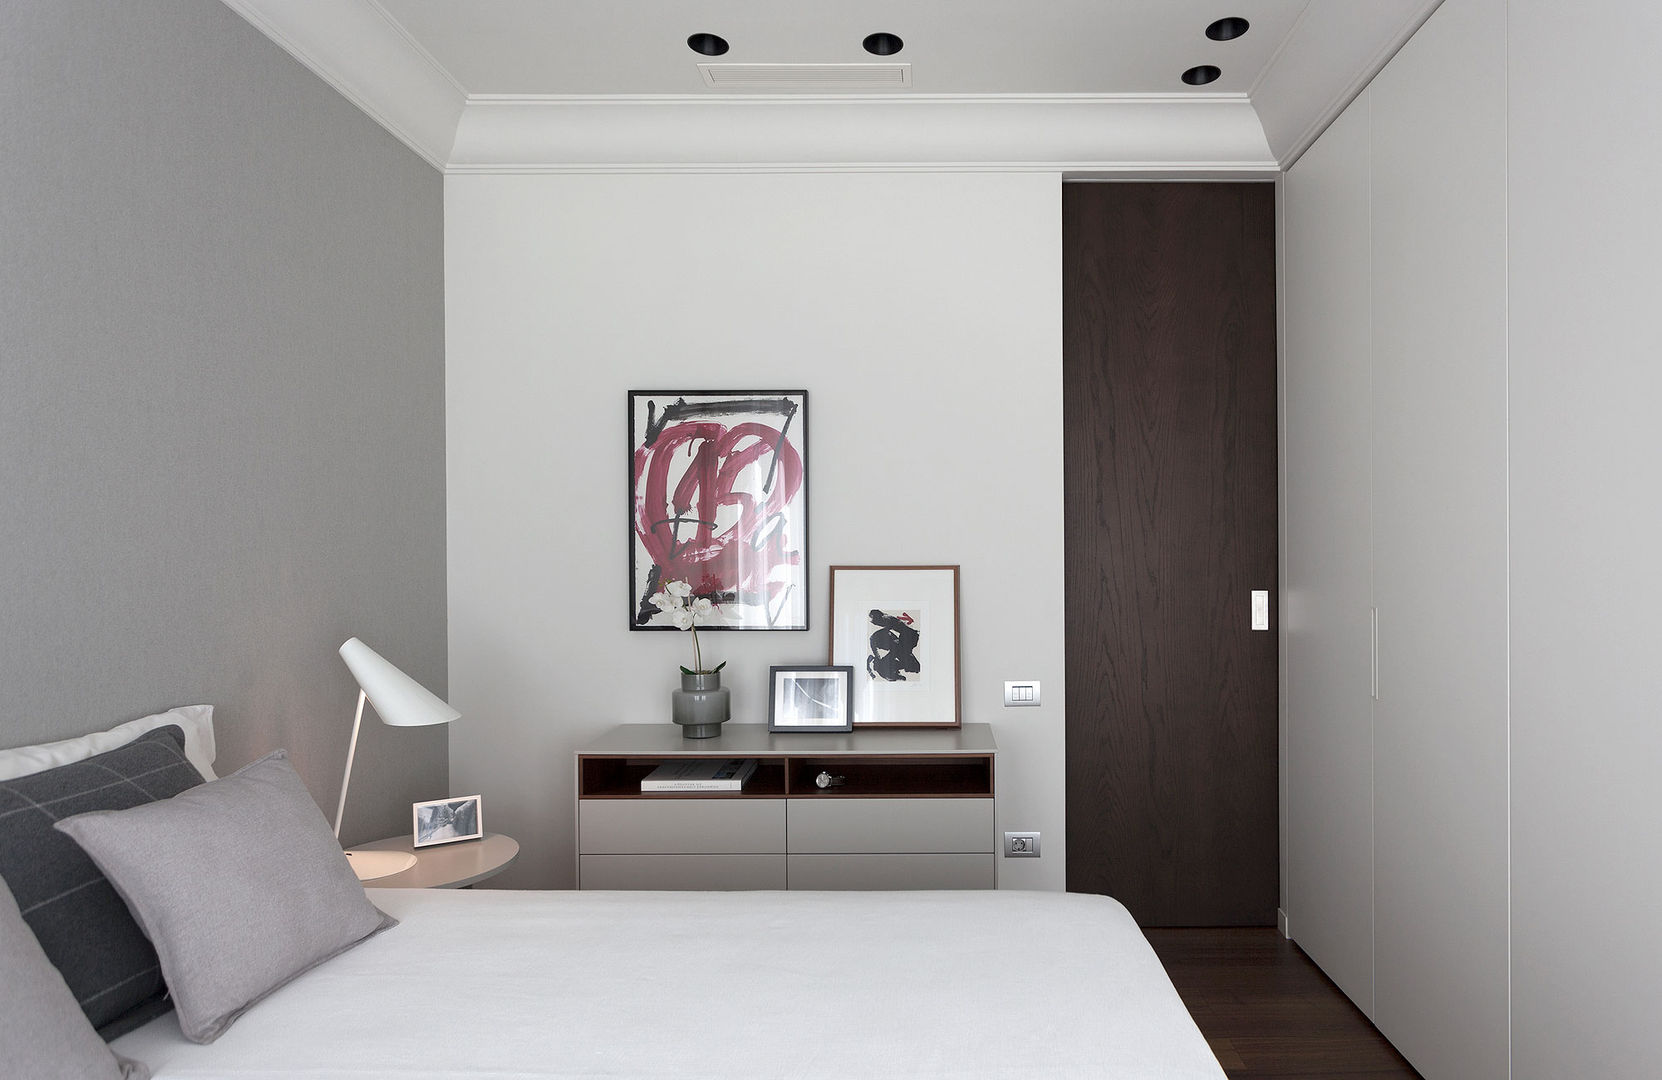 Dormitorio principal en tonos neutros decorado con arte MANUEL GARCÍA ASOCIADOS Dormitorios modernos